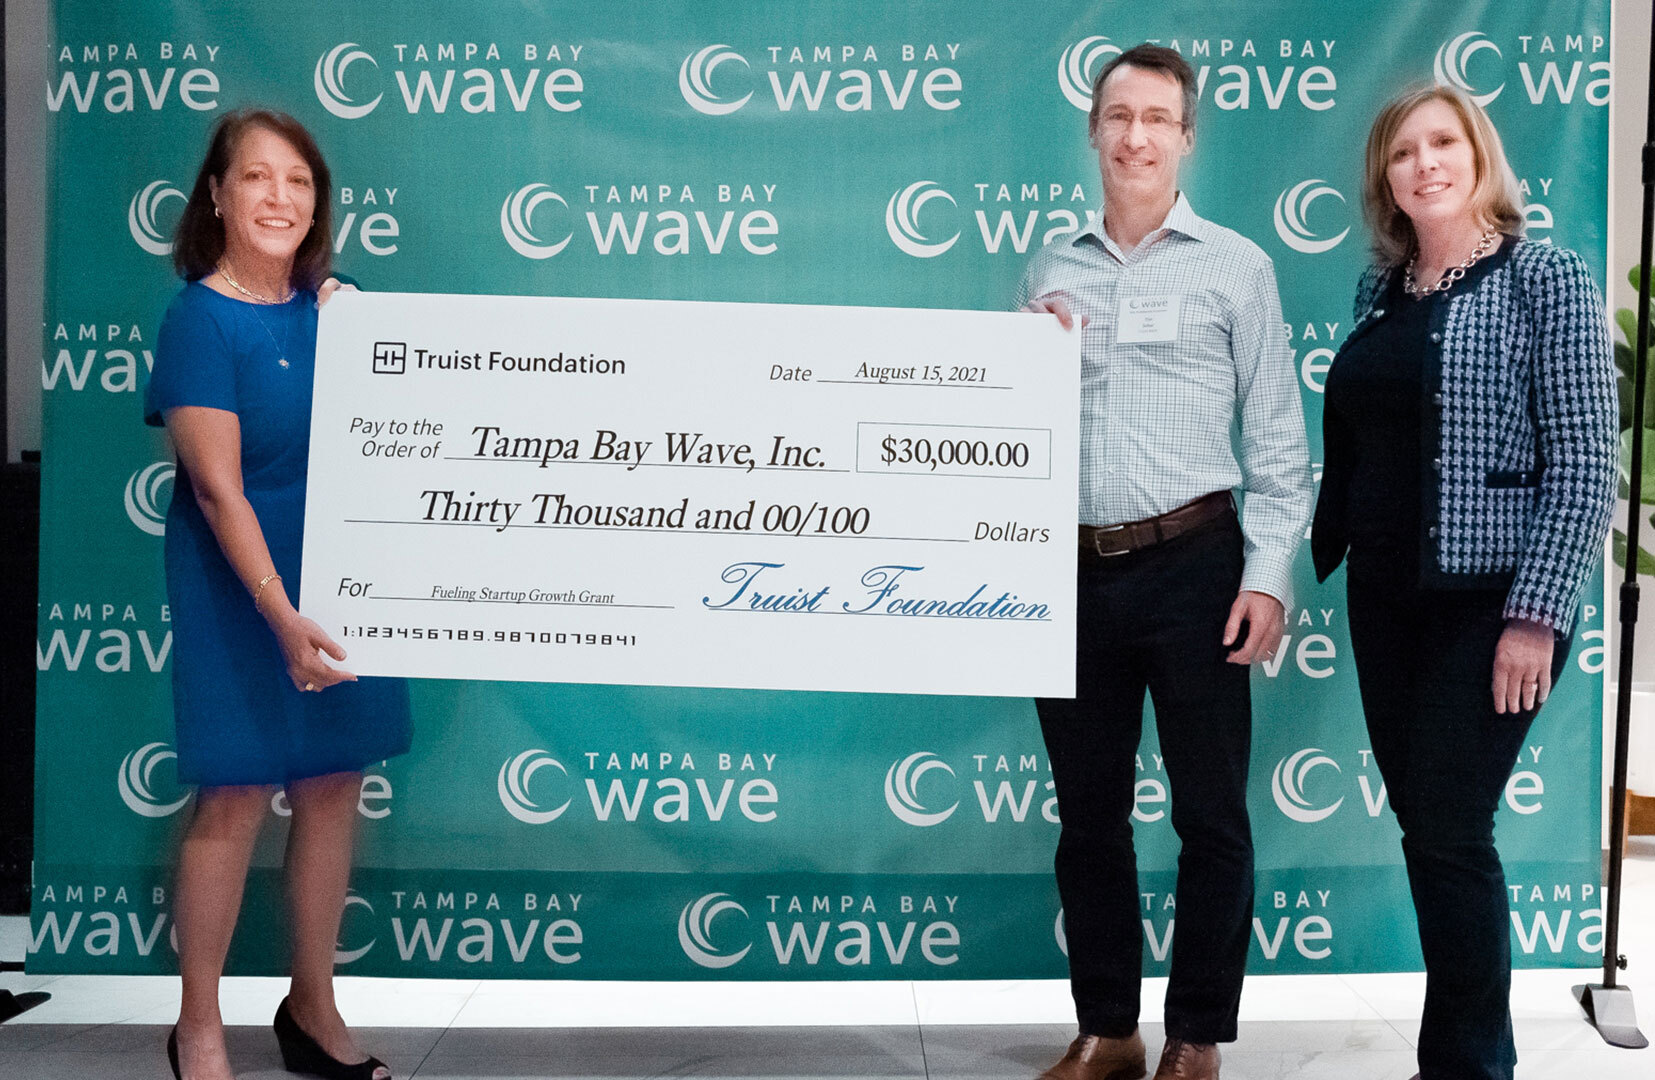 Truist Foundation's Tim Schar, Grant Presentation to Tampa Bay Wave, September 14, 2021